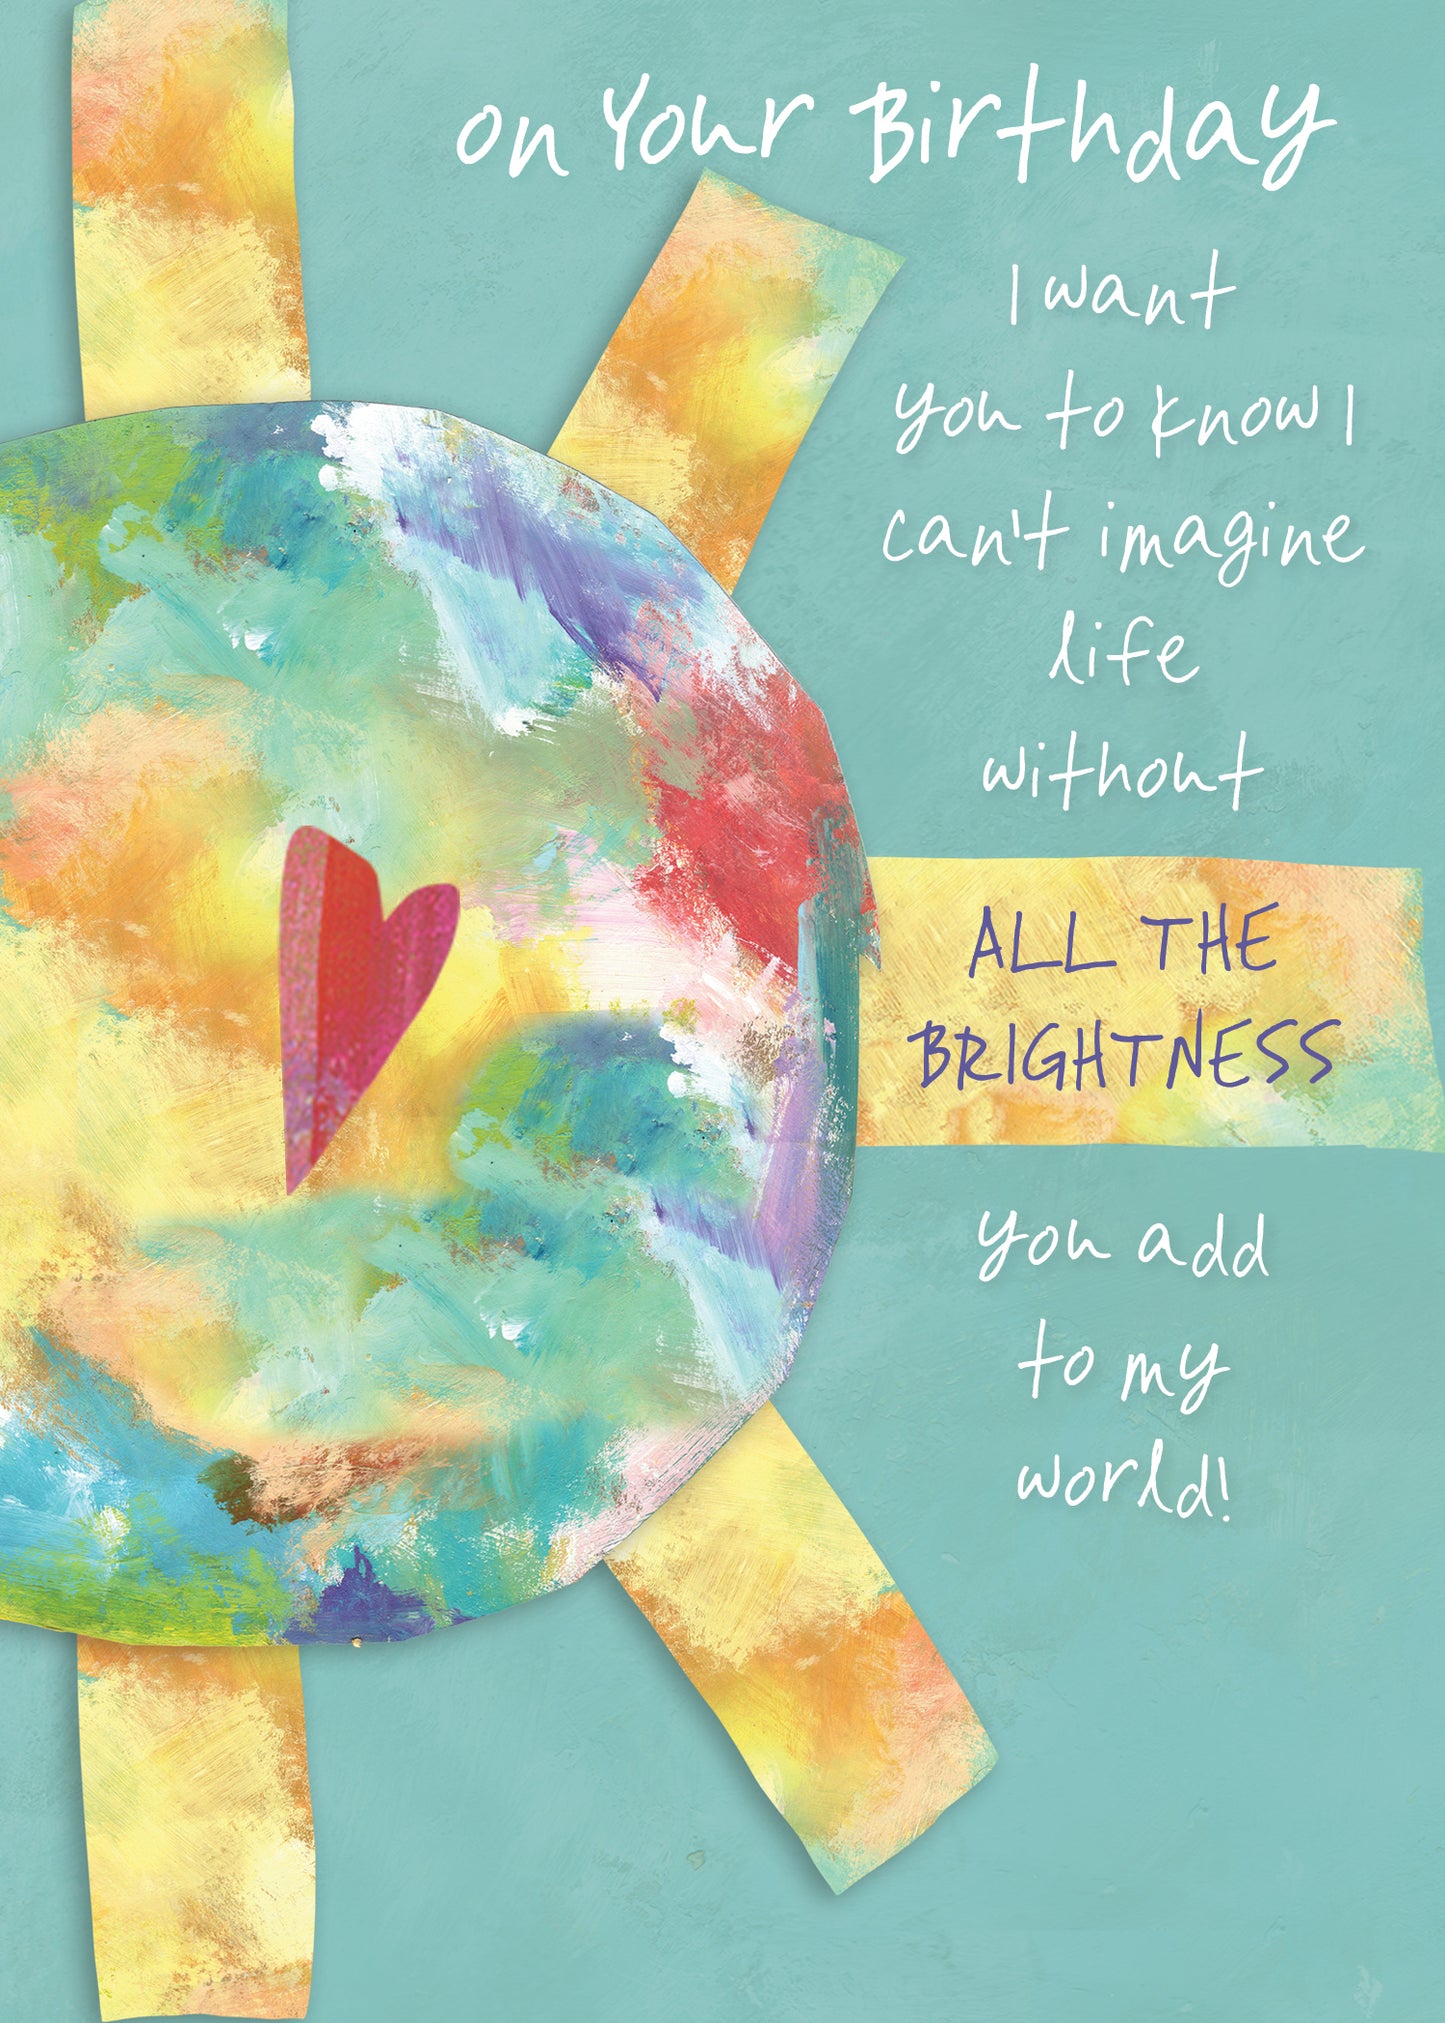 BIRTHDAY CARD - All the Brightness You Add to my World